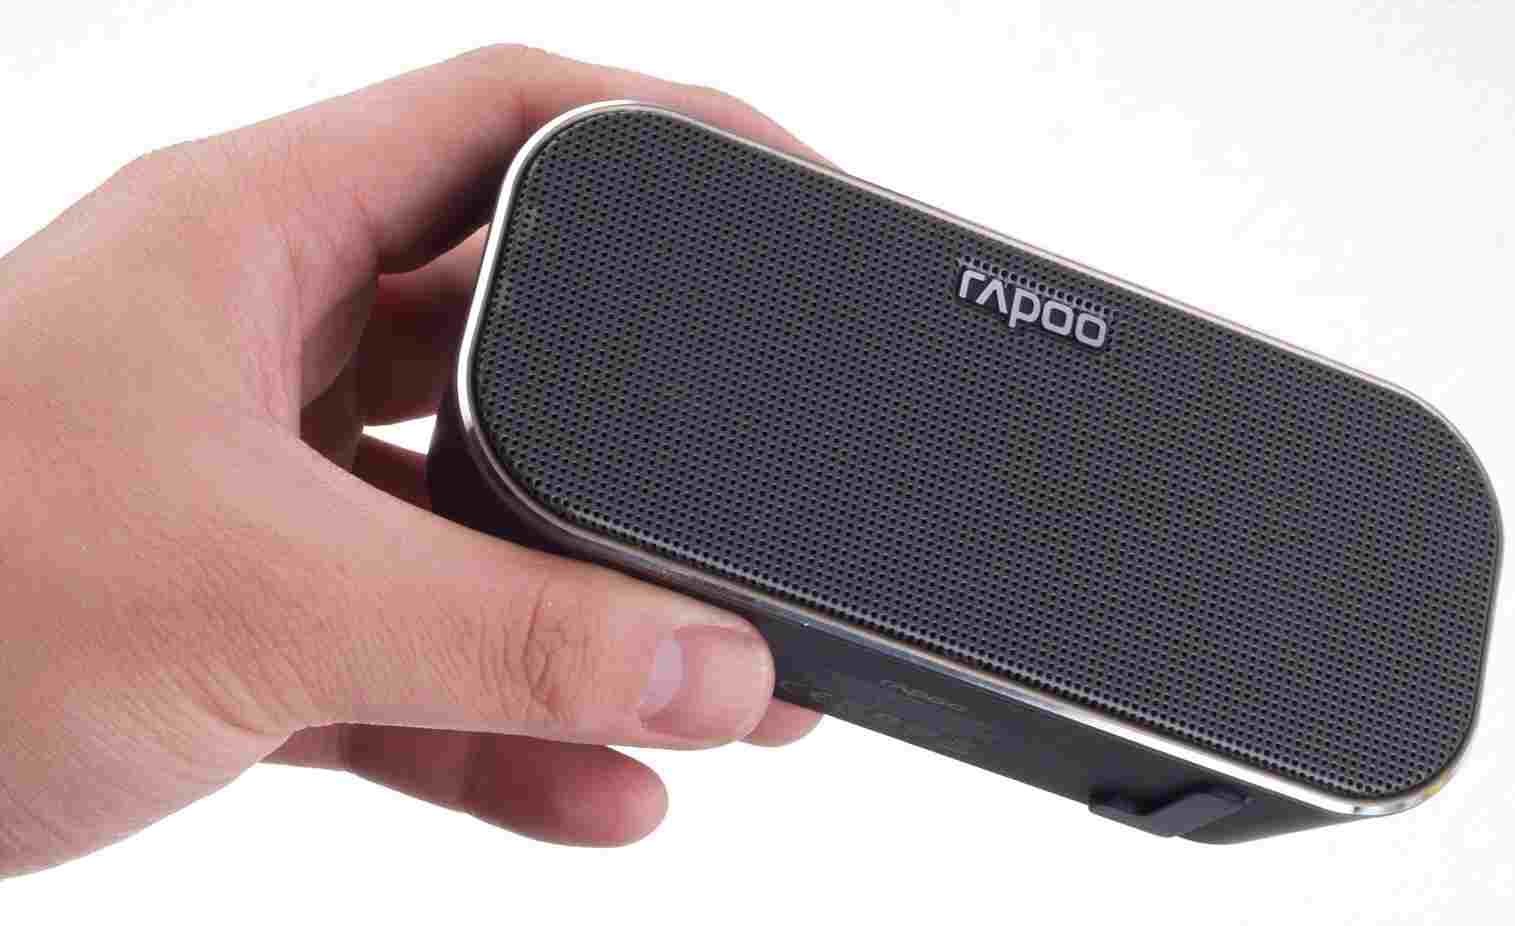 Халява не пахнет: Rapoo A500